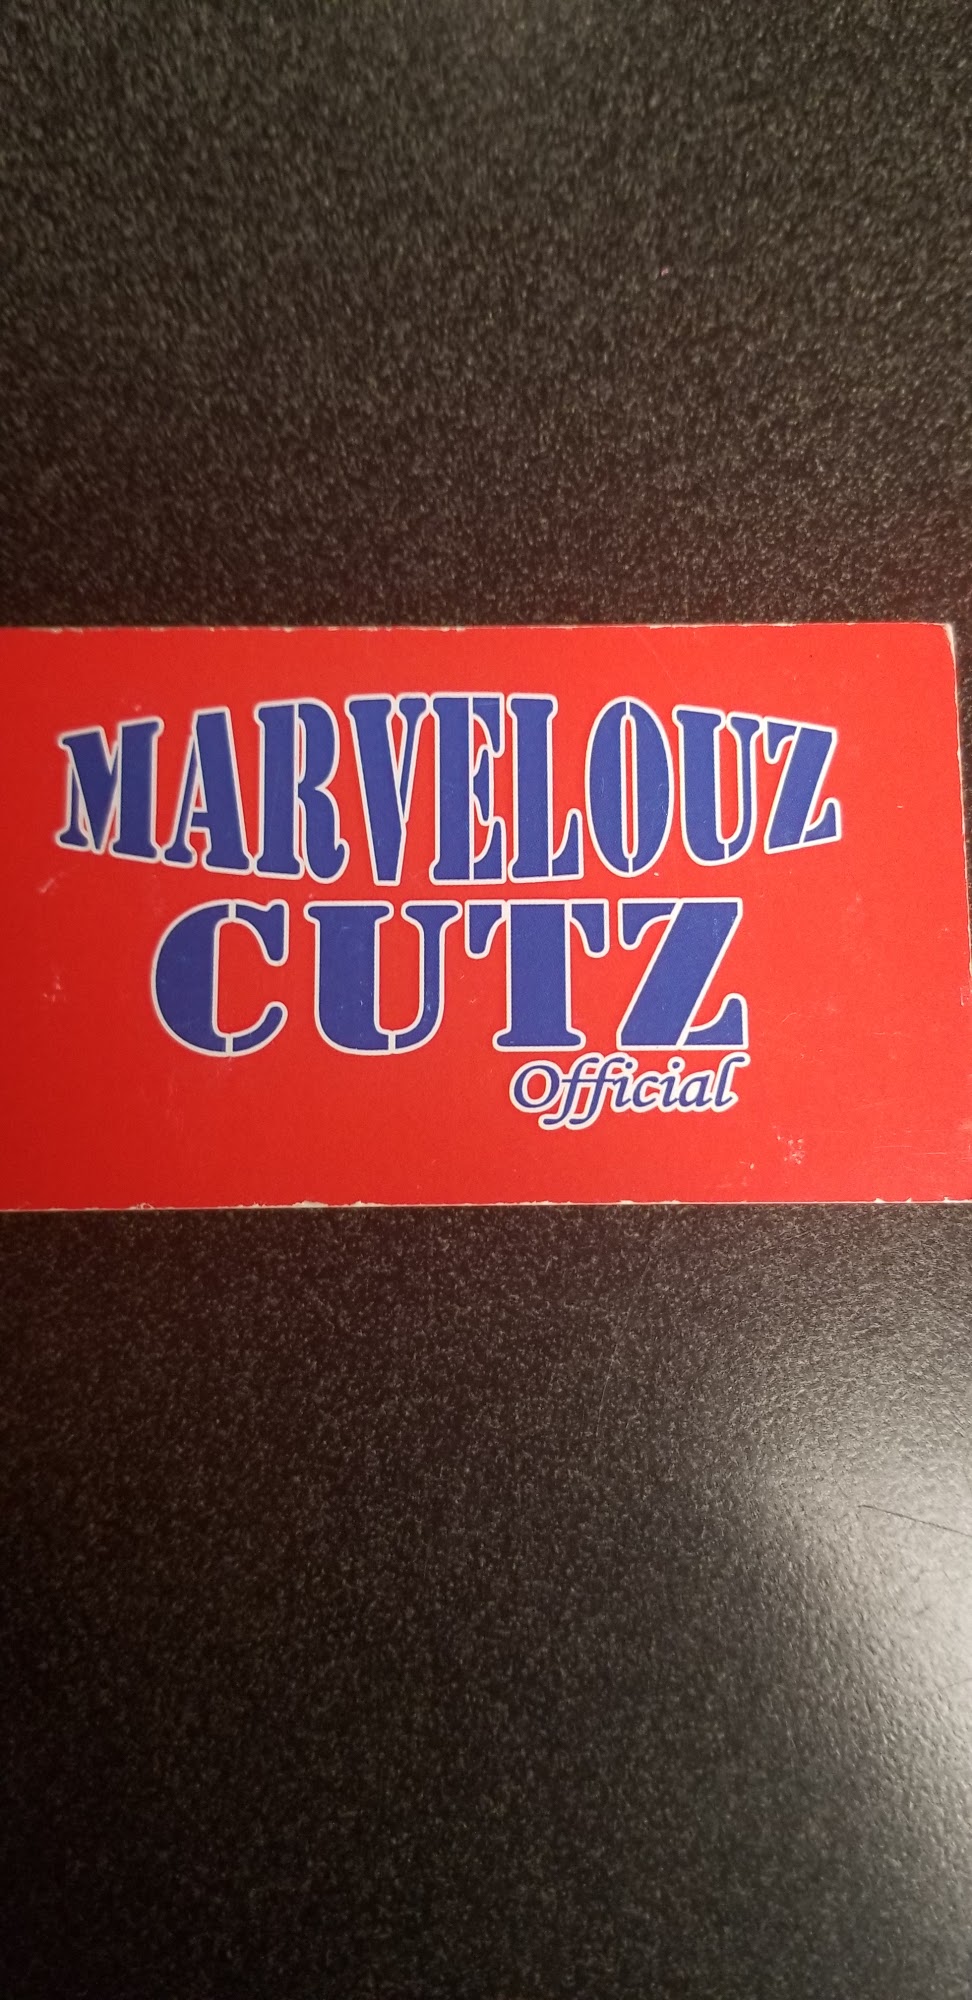 Marvelouz Cutz